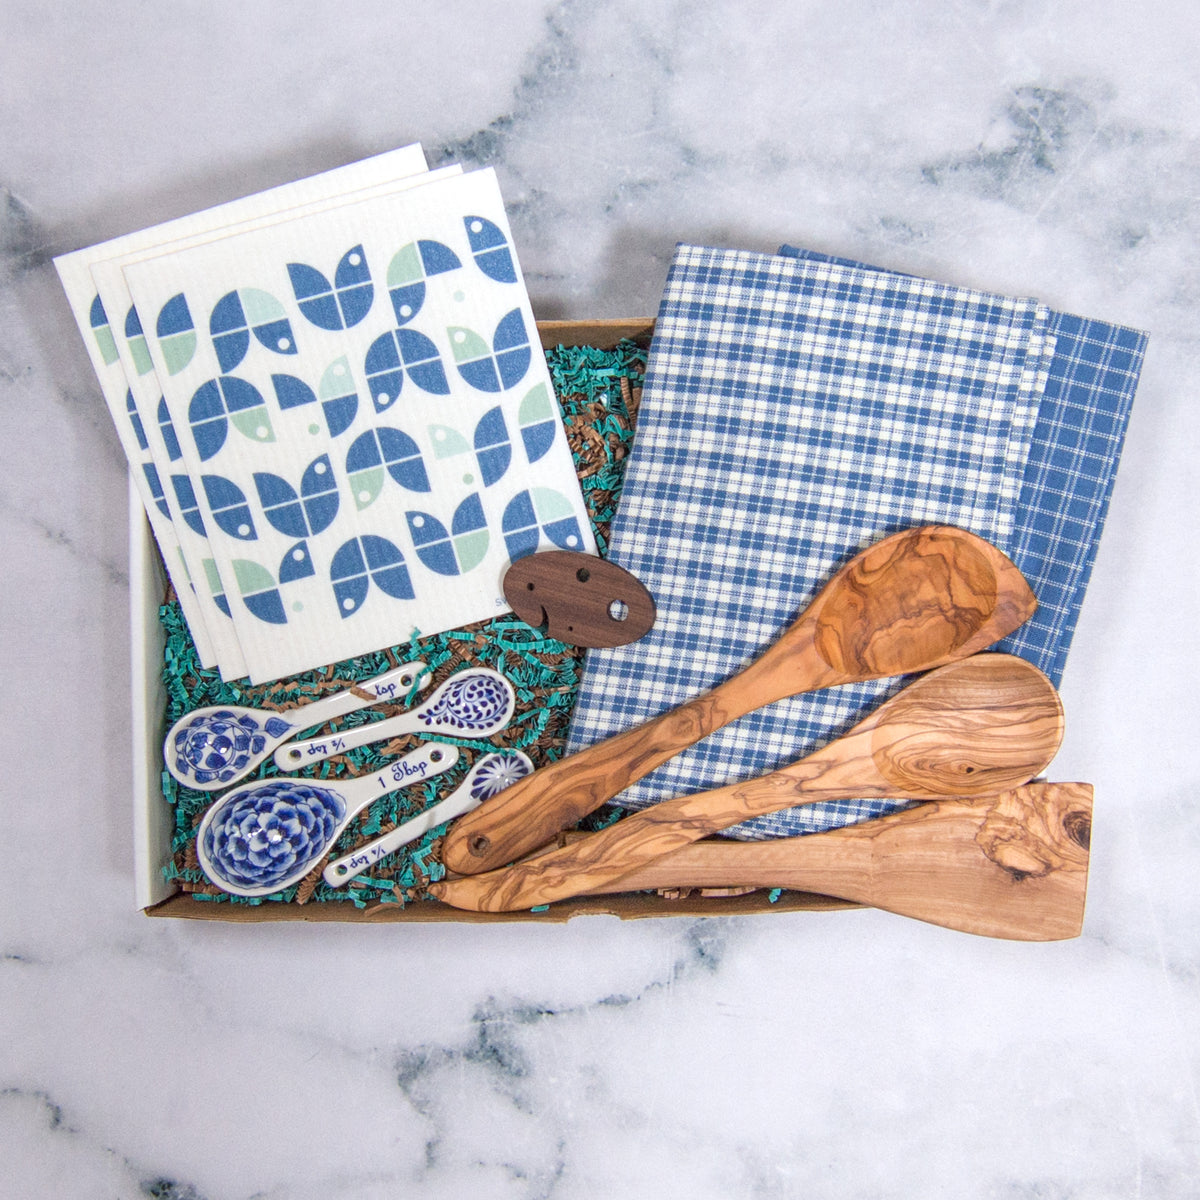 French Blue Kitchenware Gift Box – CoCo B. Kitchen & Home